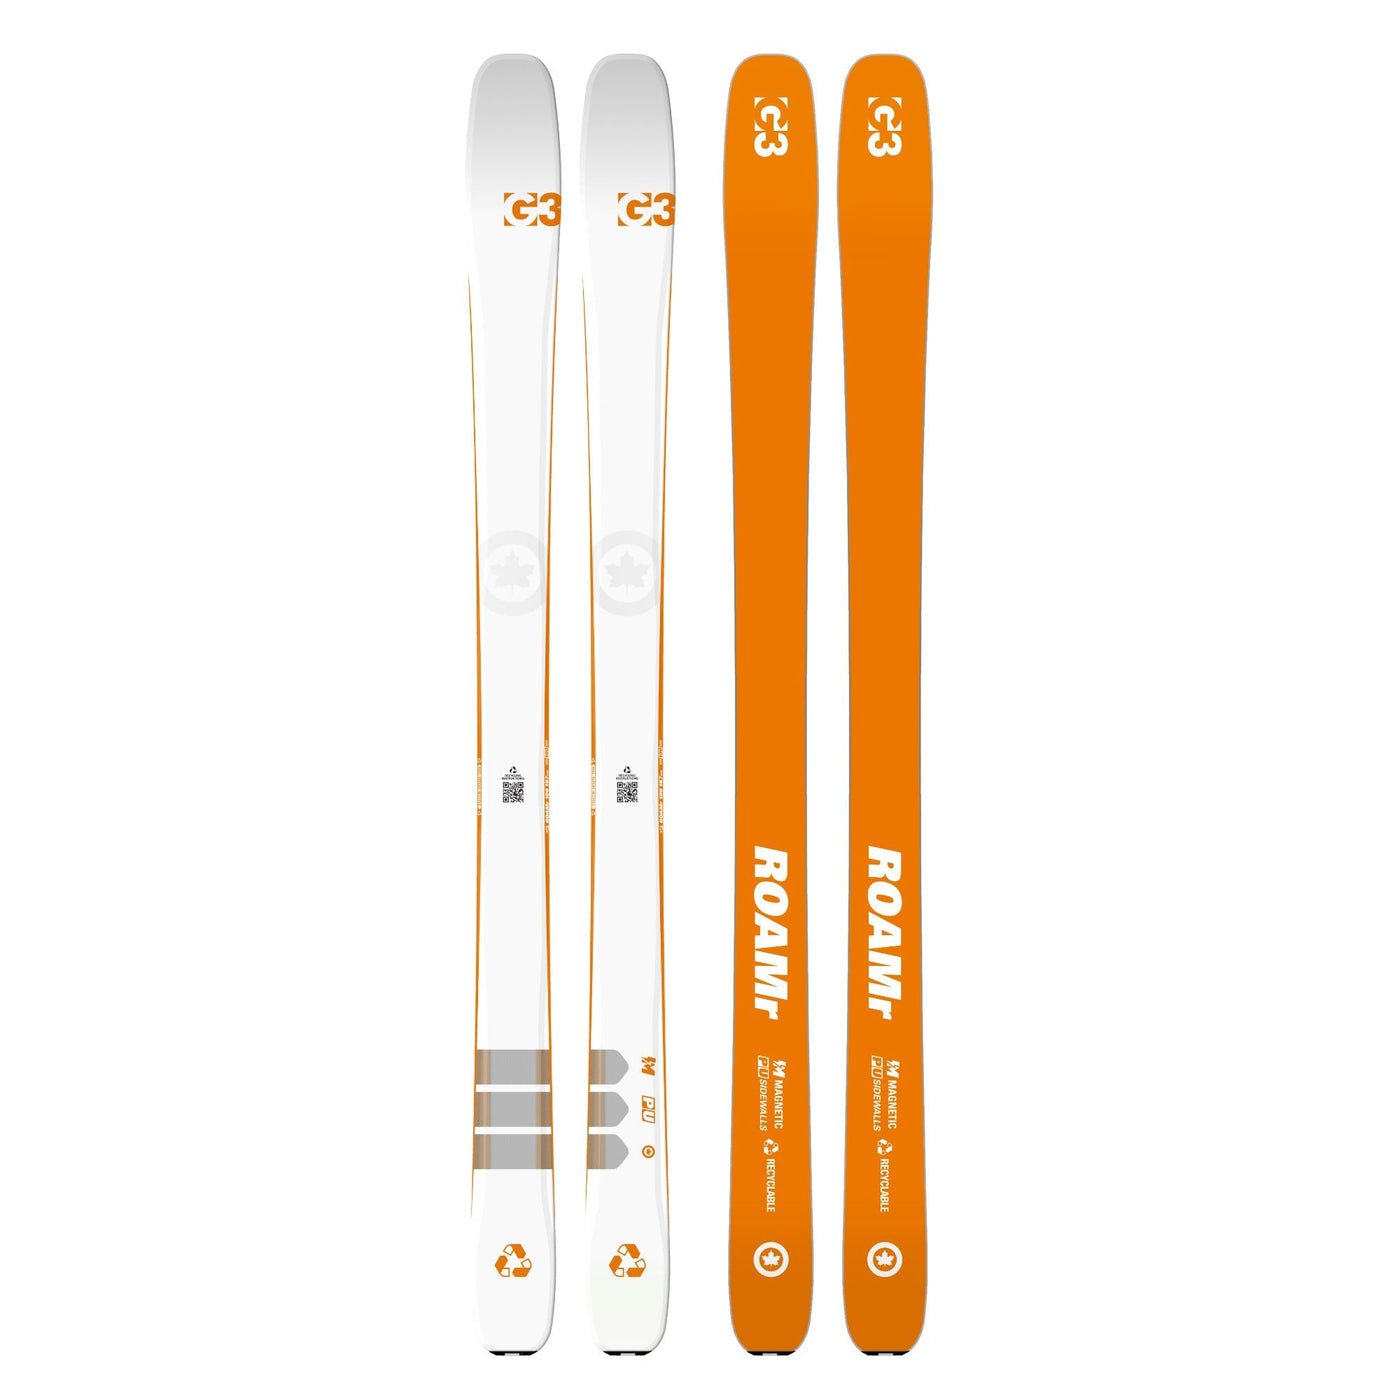 roamr r3 100 skis product photo